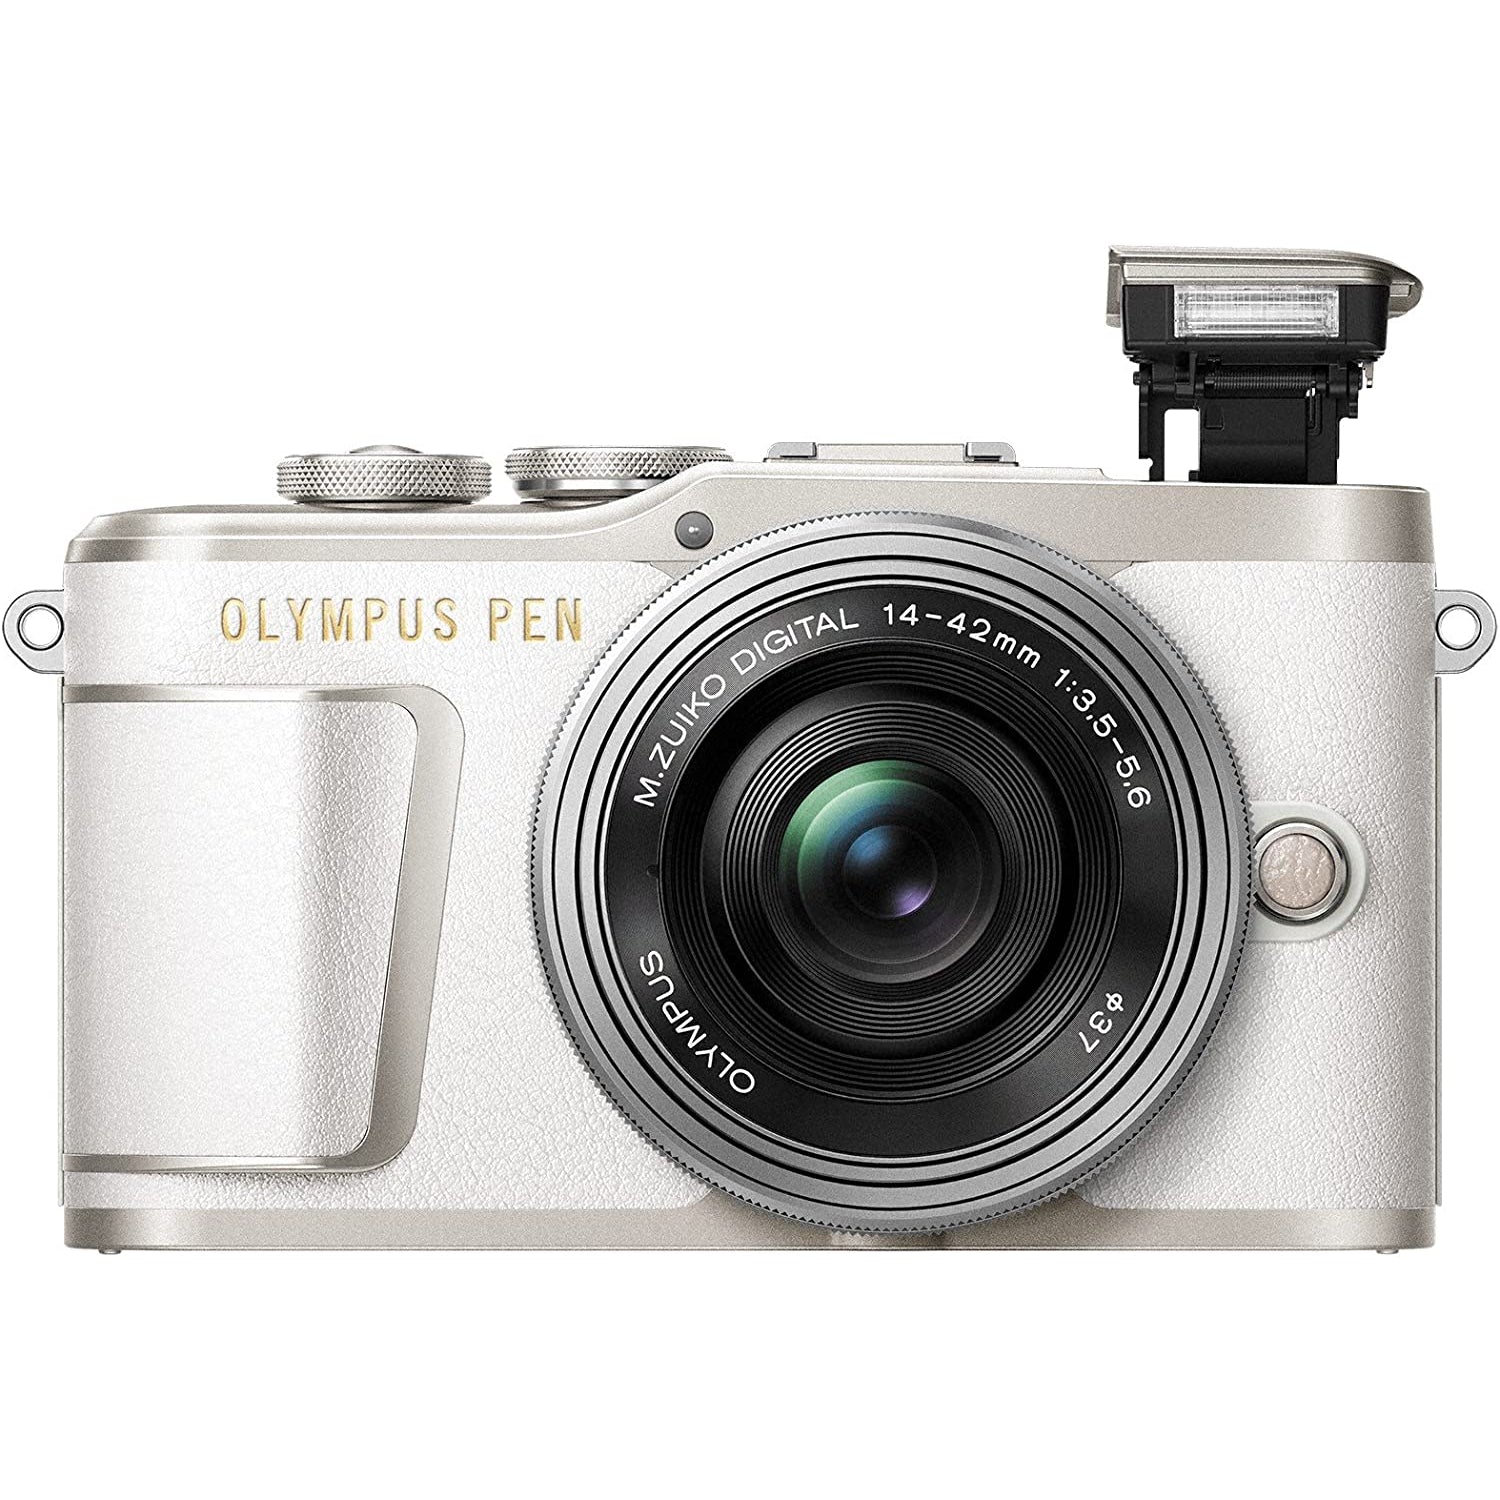 Olympus PEN E-PL9 Kit, Micro Four Thirds System Camera, 4-42 mm EZ Zoom Lens, White/Silver